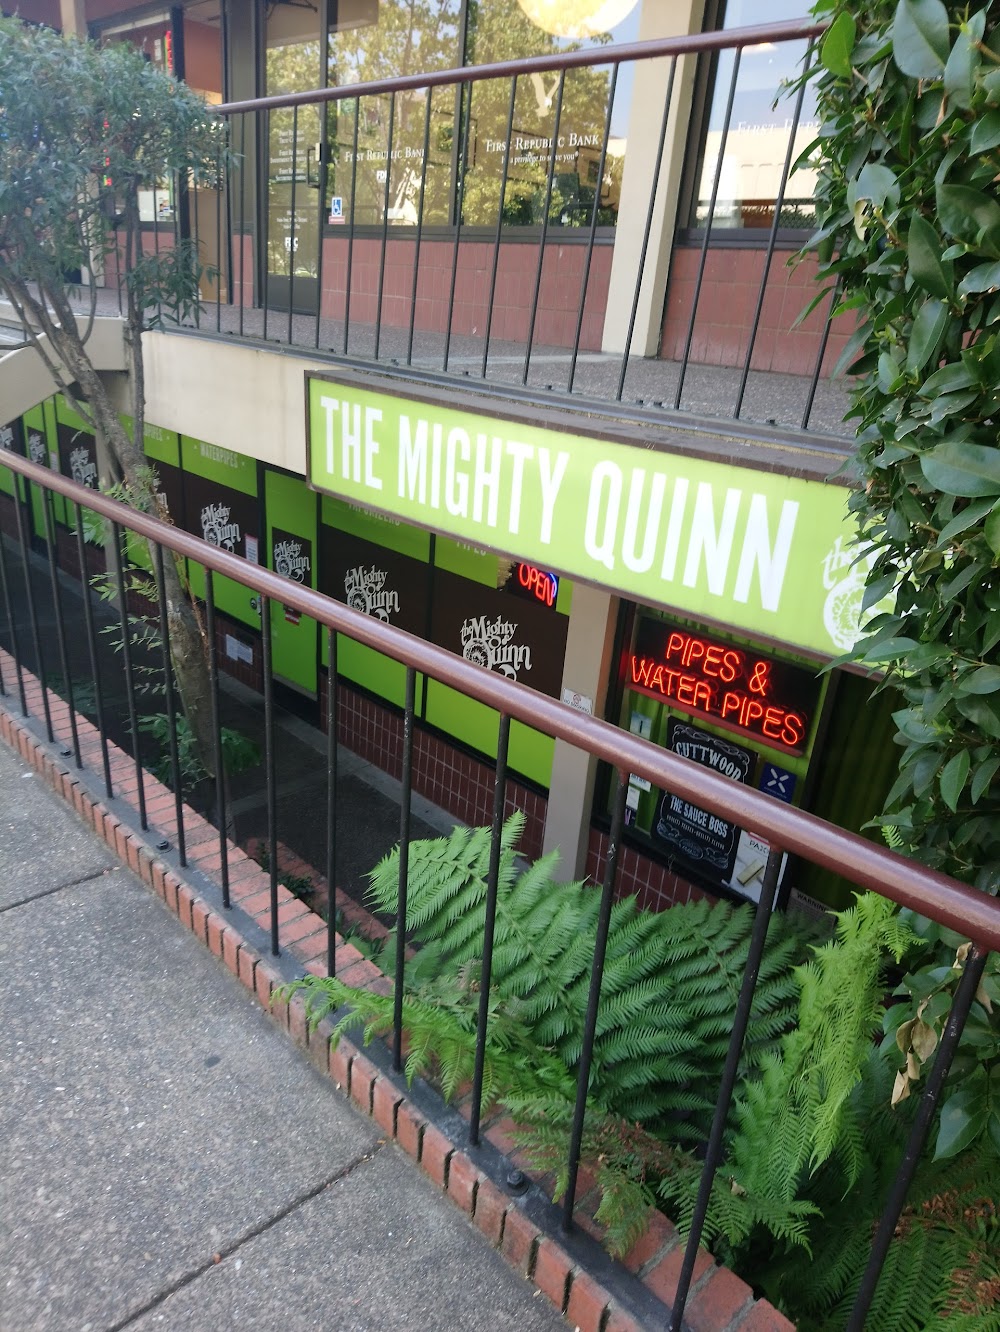 The Mighty Quinn Smoke/Vape Shop & Glass Gallery